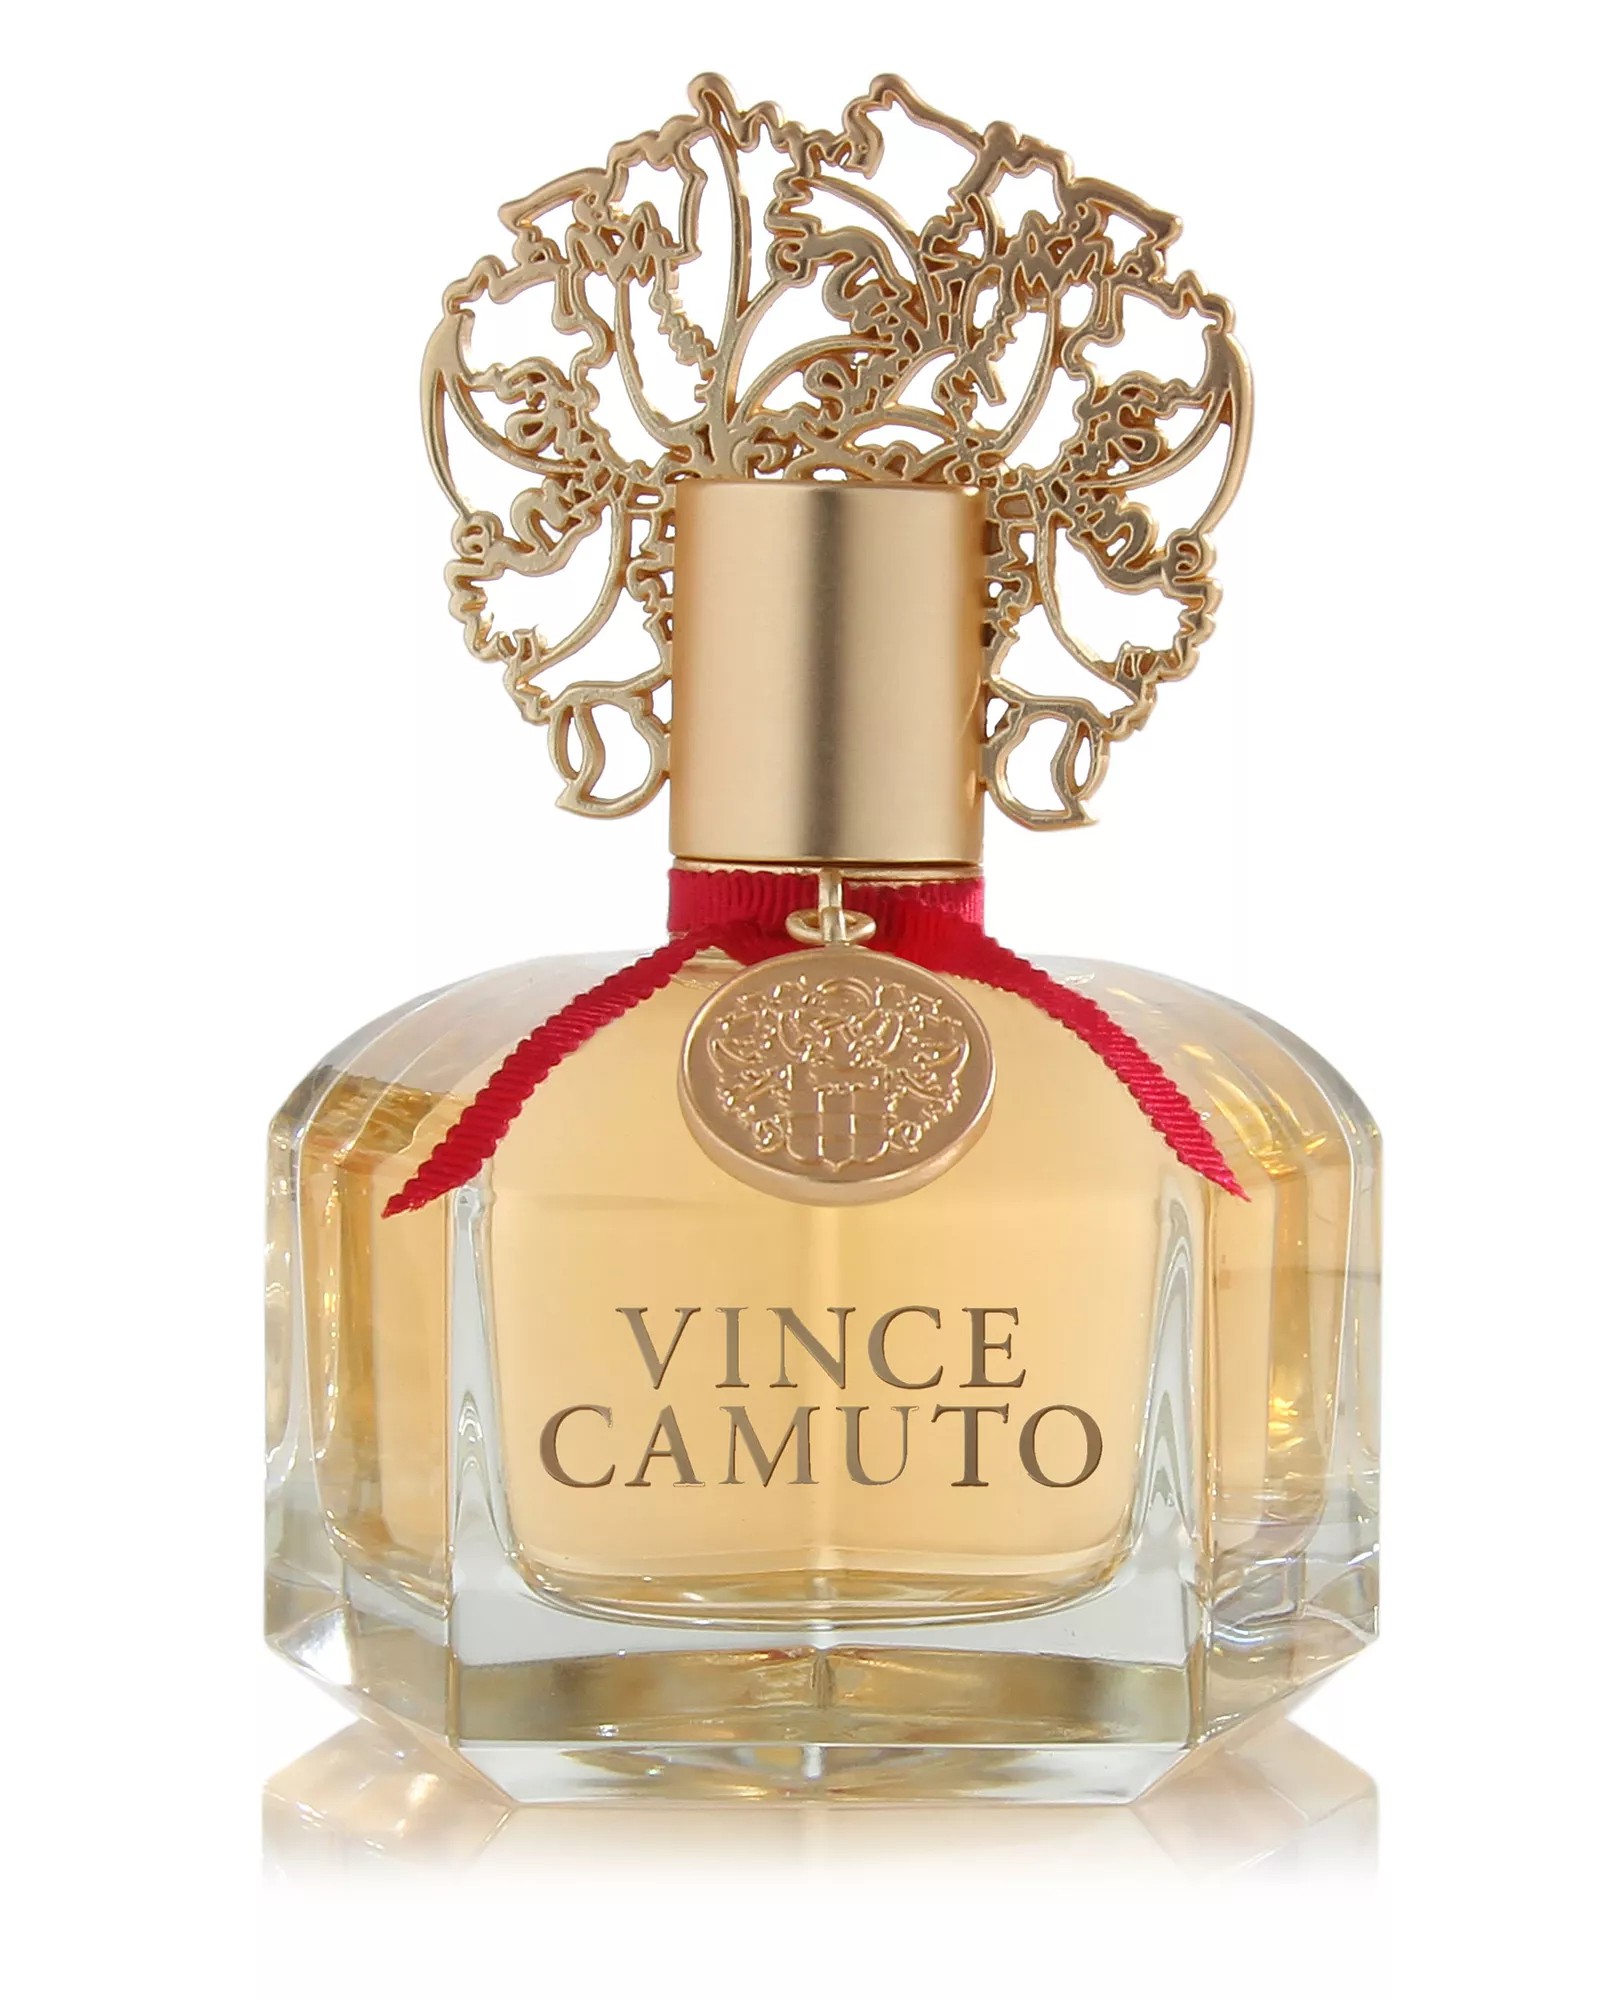 Shop VINCE CAMUTO Perfumes Online - Paris Gallery